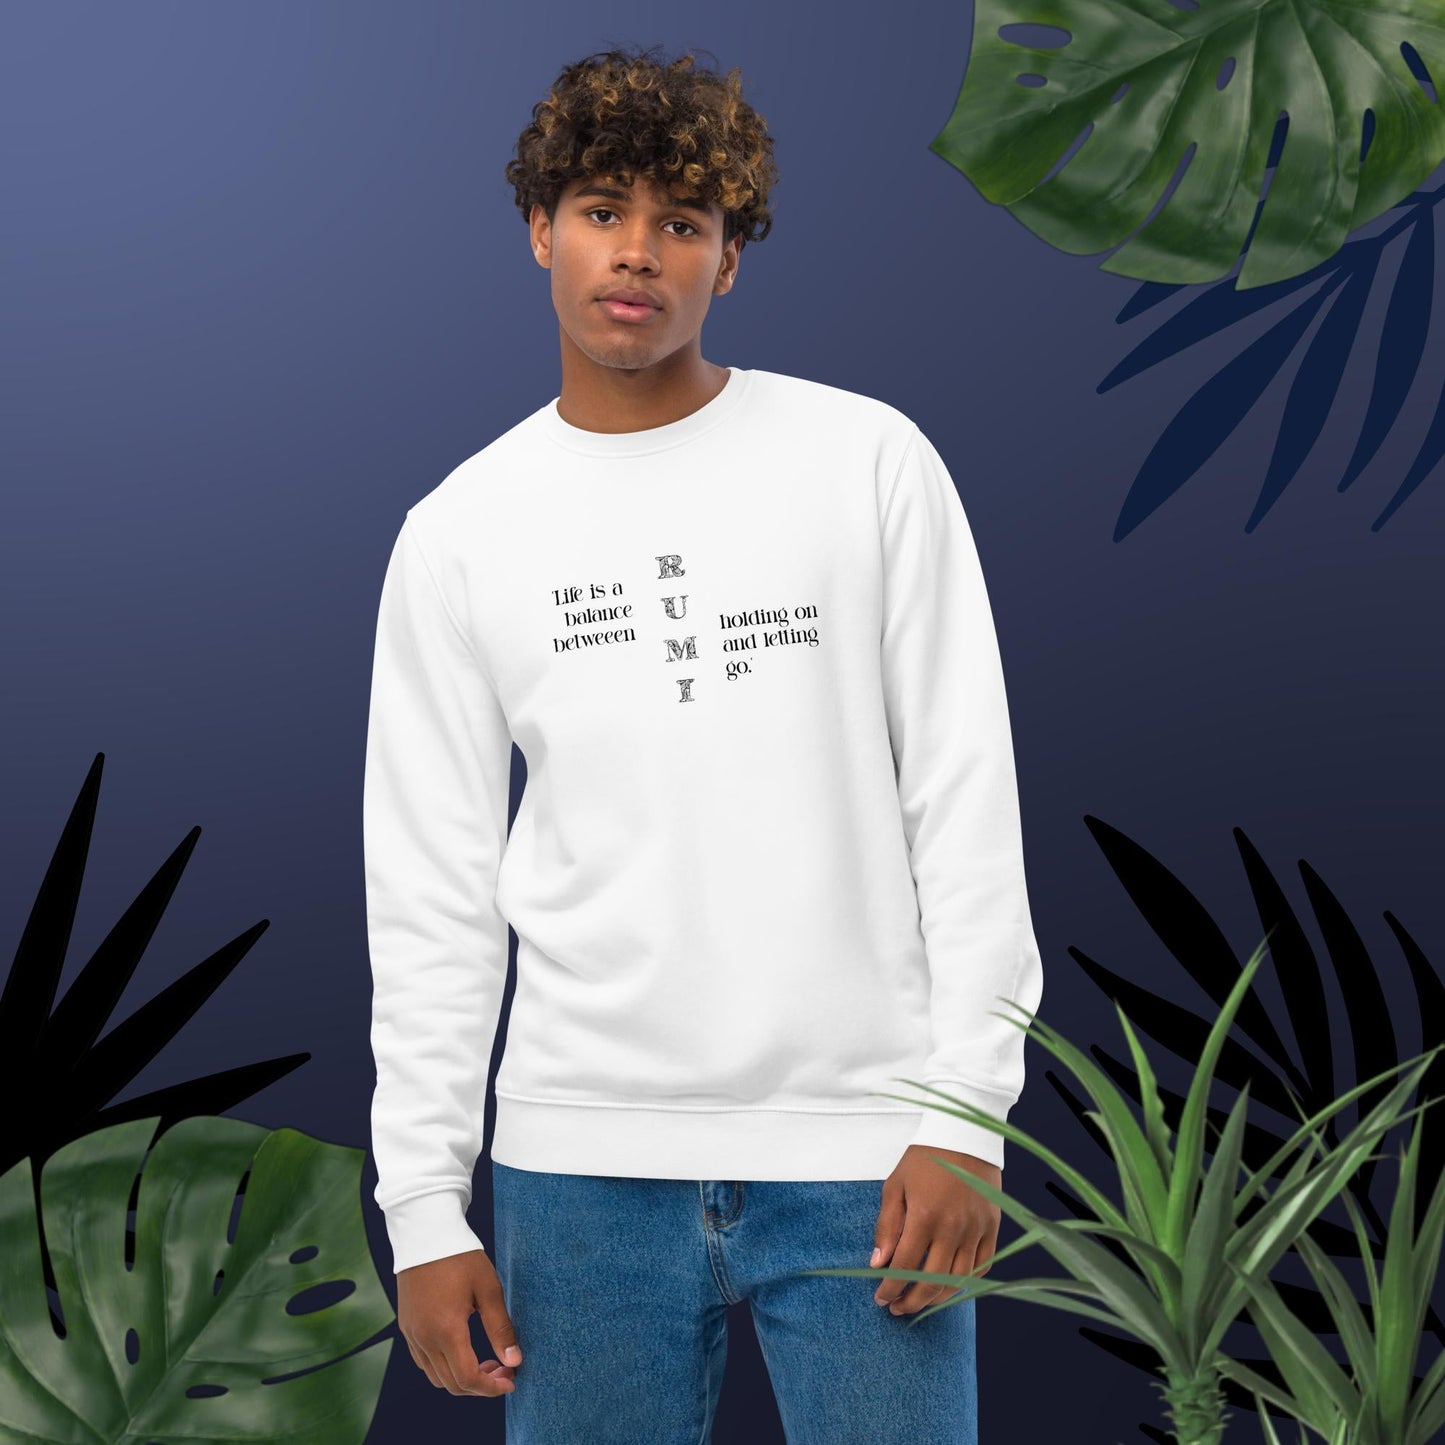 Famous Quotes 'Balance' Rumi Organic Cotton Sweatshirt - Quotation Sweatshirt